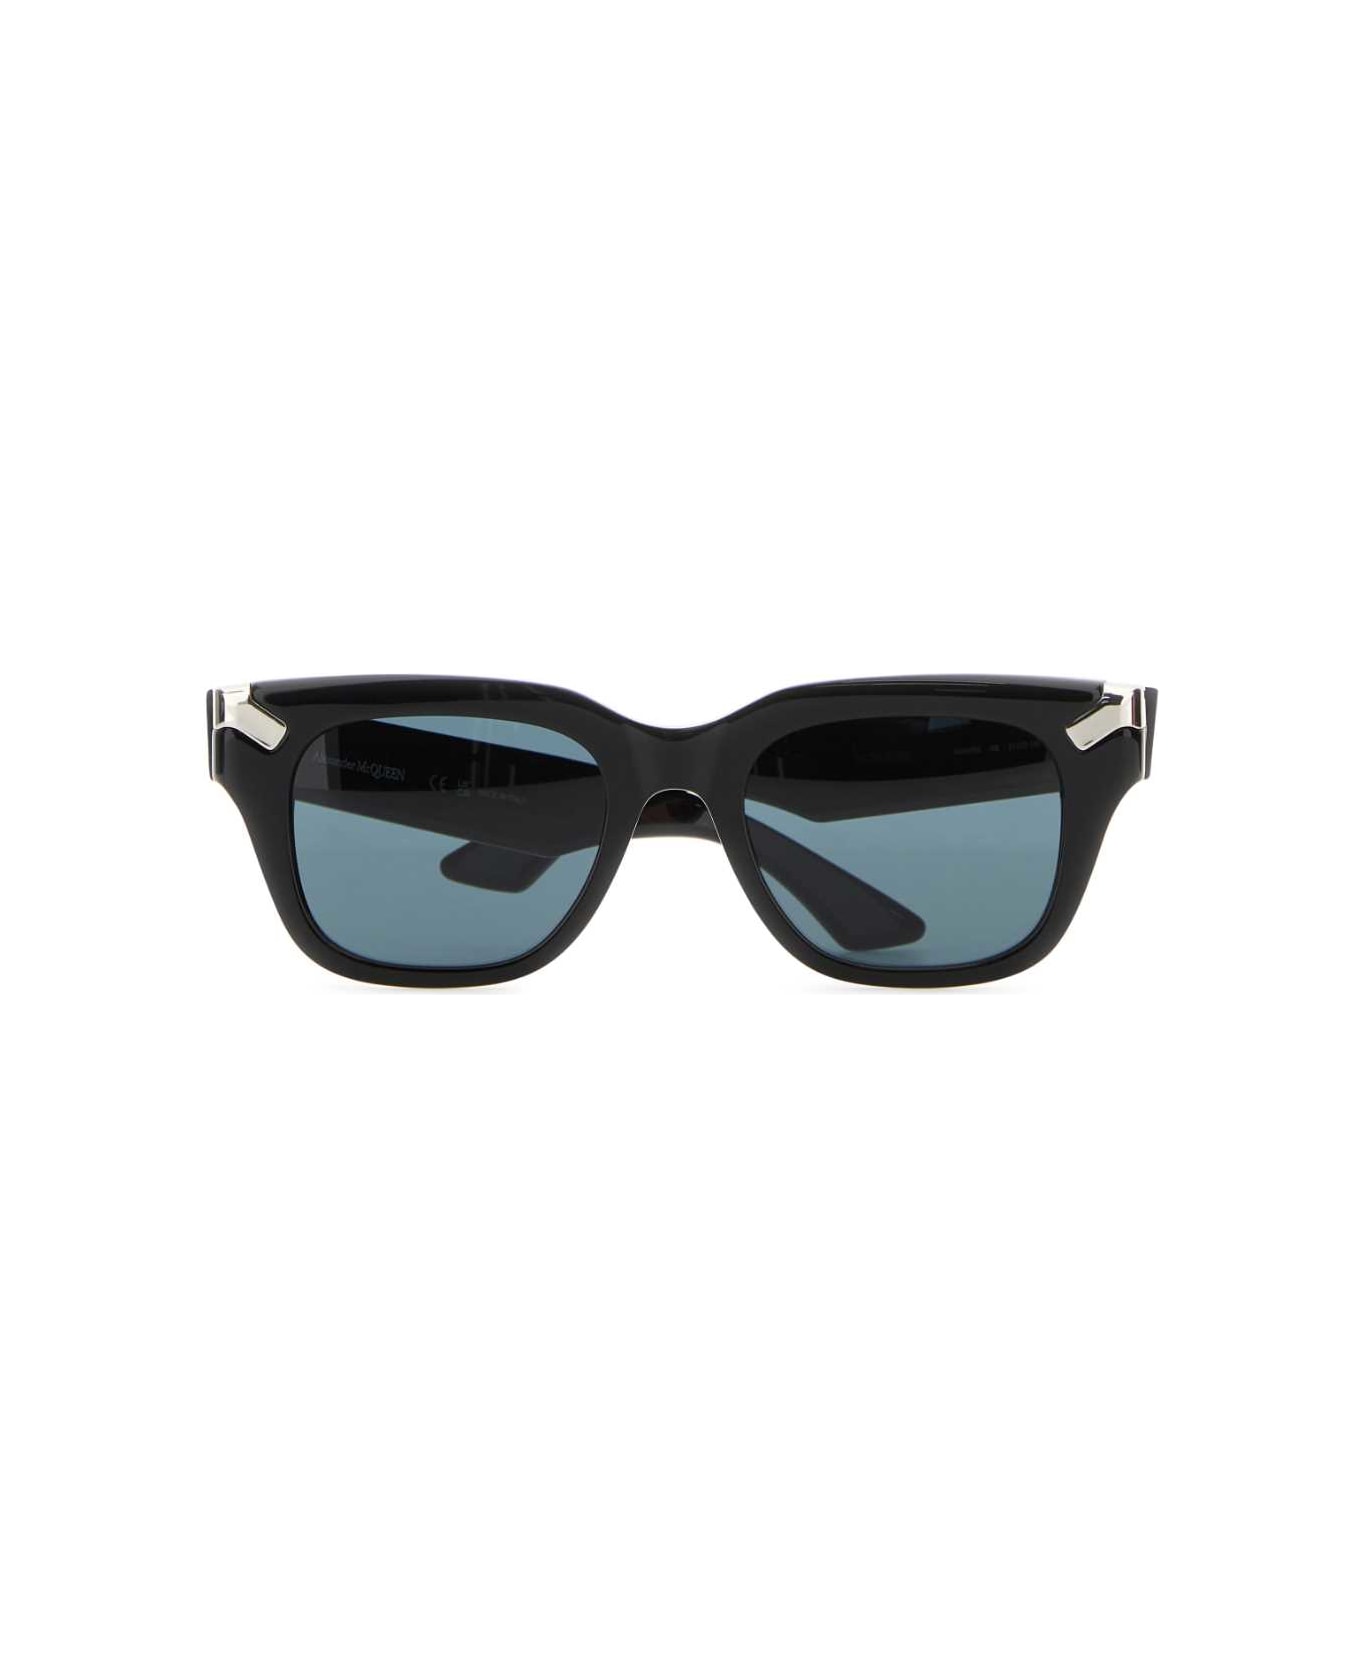 Alexander McQueen Black Acetate Punk Rivet Sunglasses - SOLIDBLUE